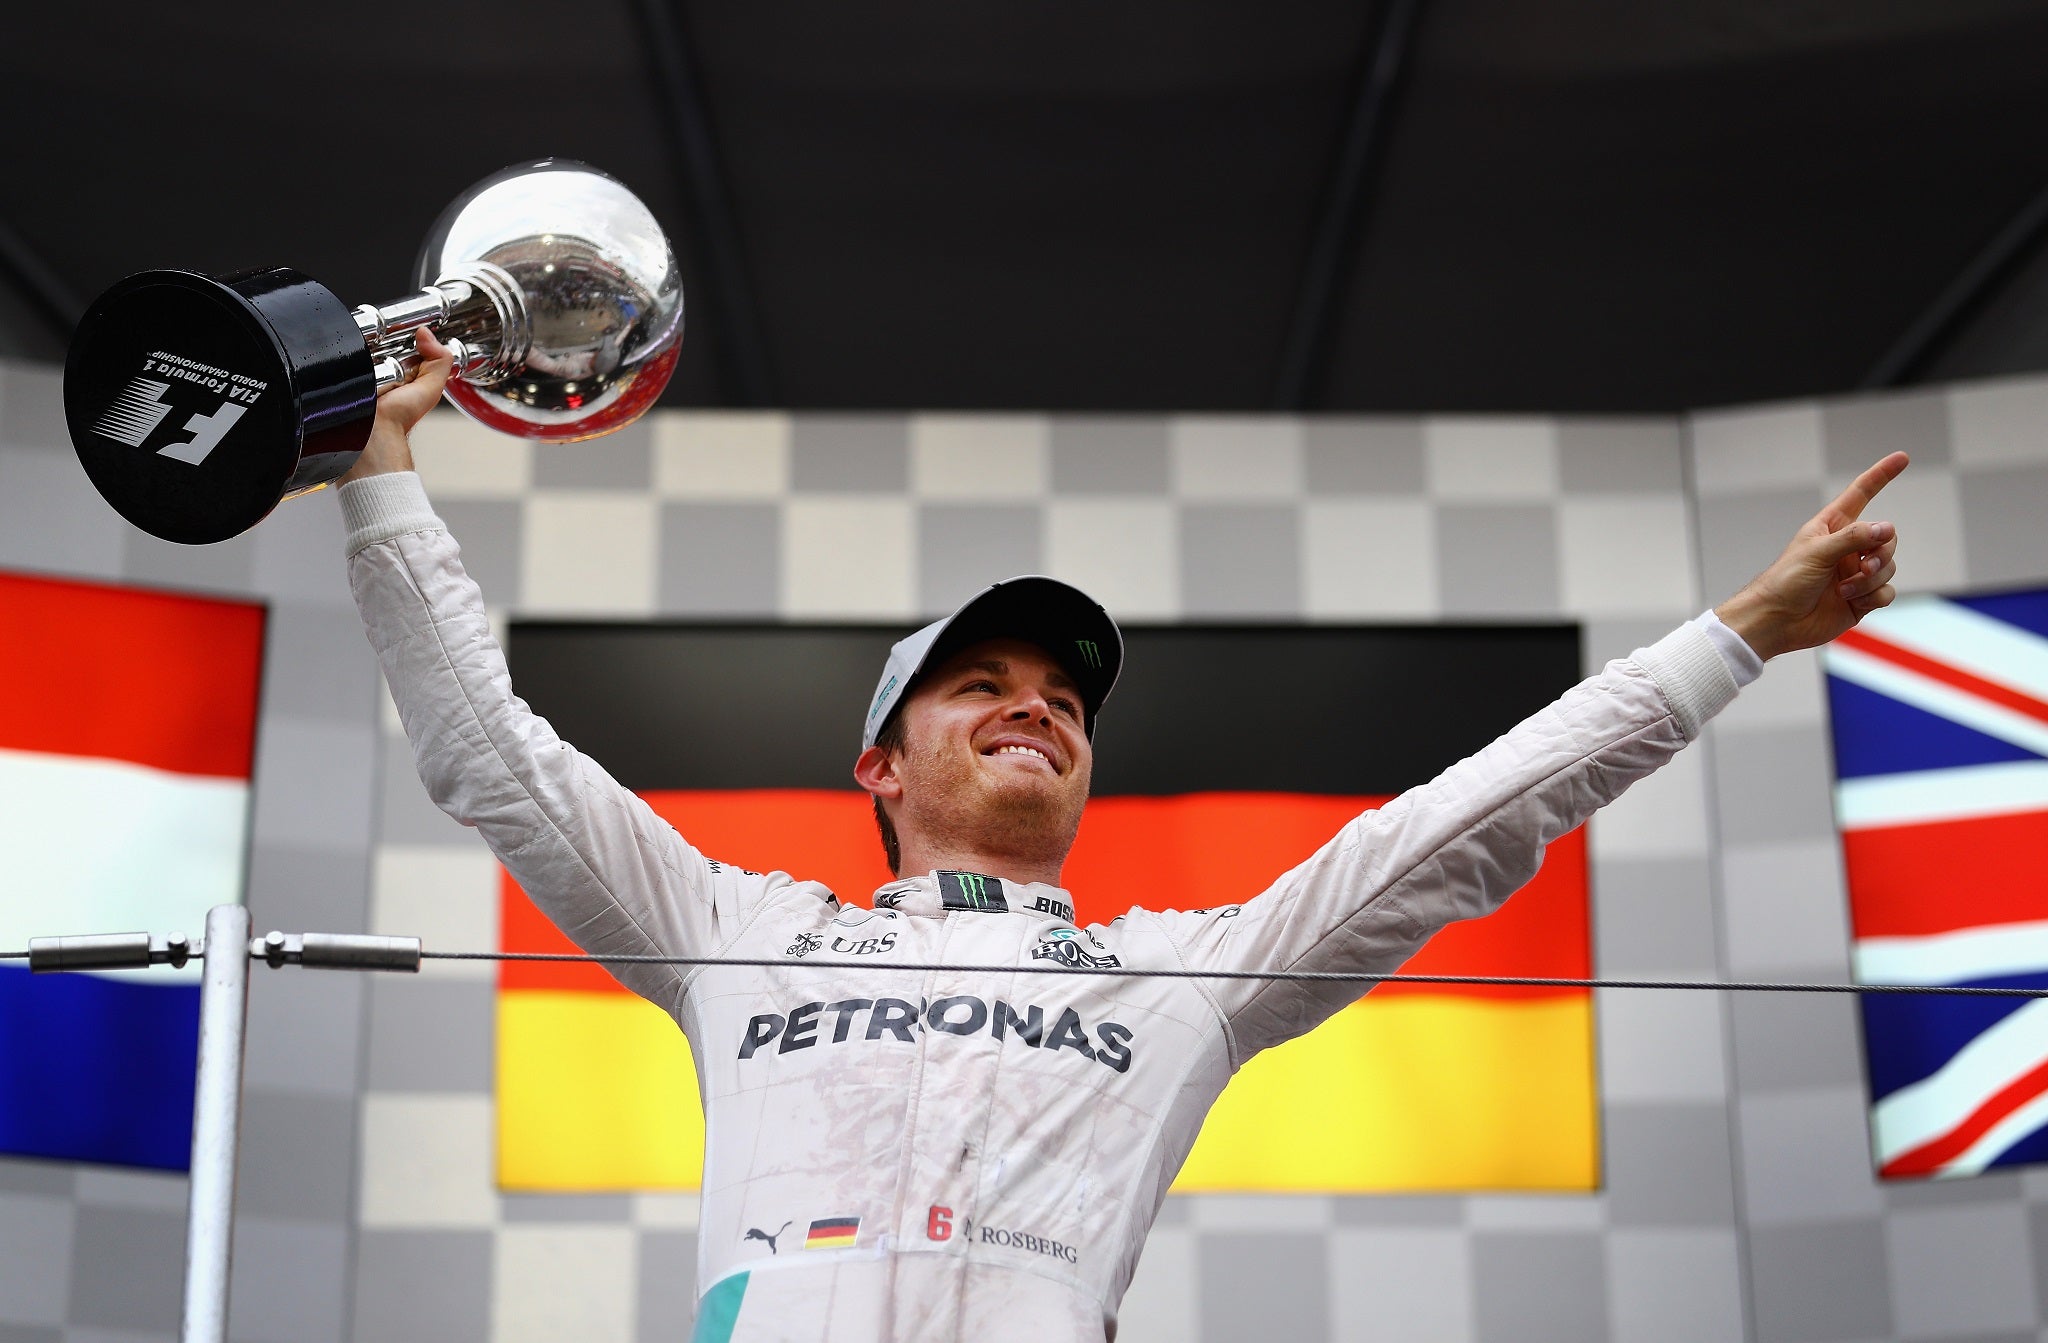 &#13;
Nico Rosberg celebrates winning the Japanese Grand Prix at Suzuka &#13;